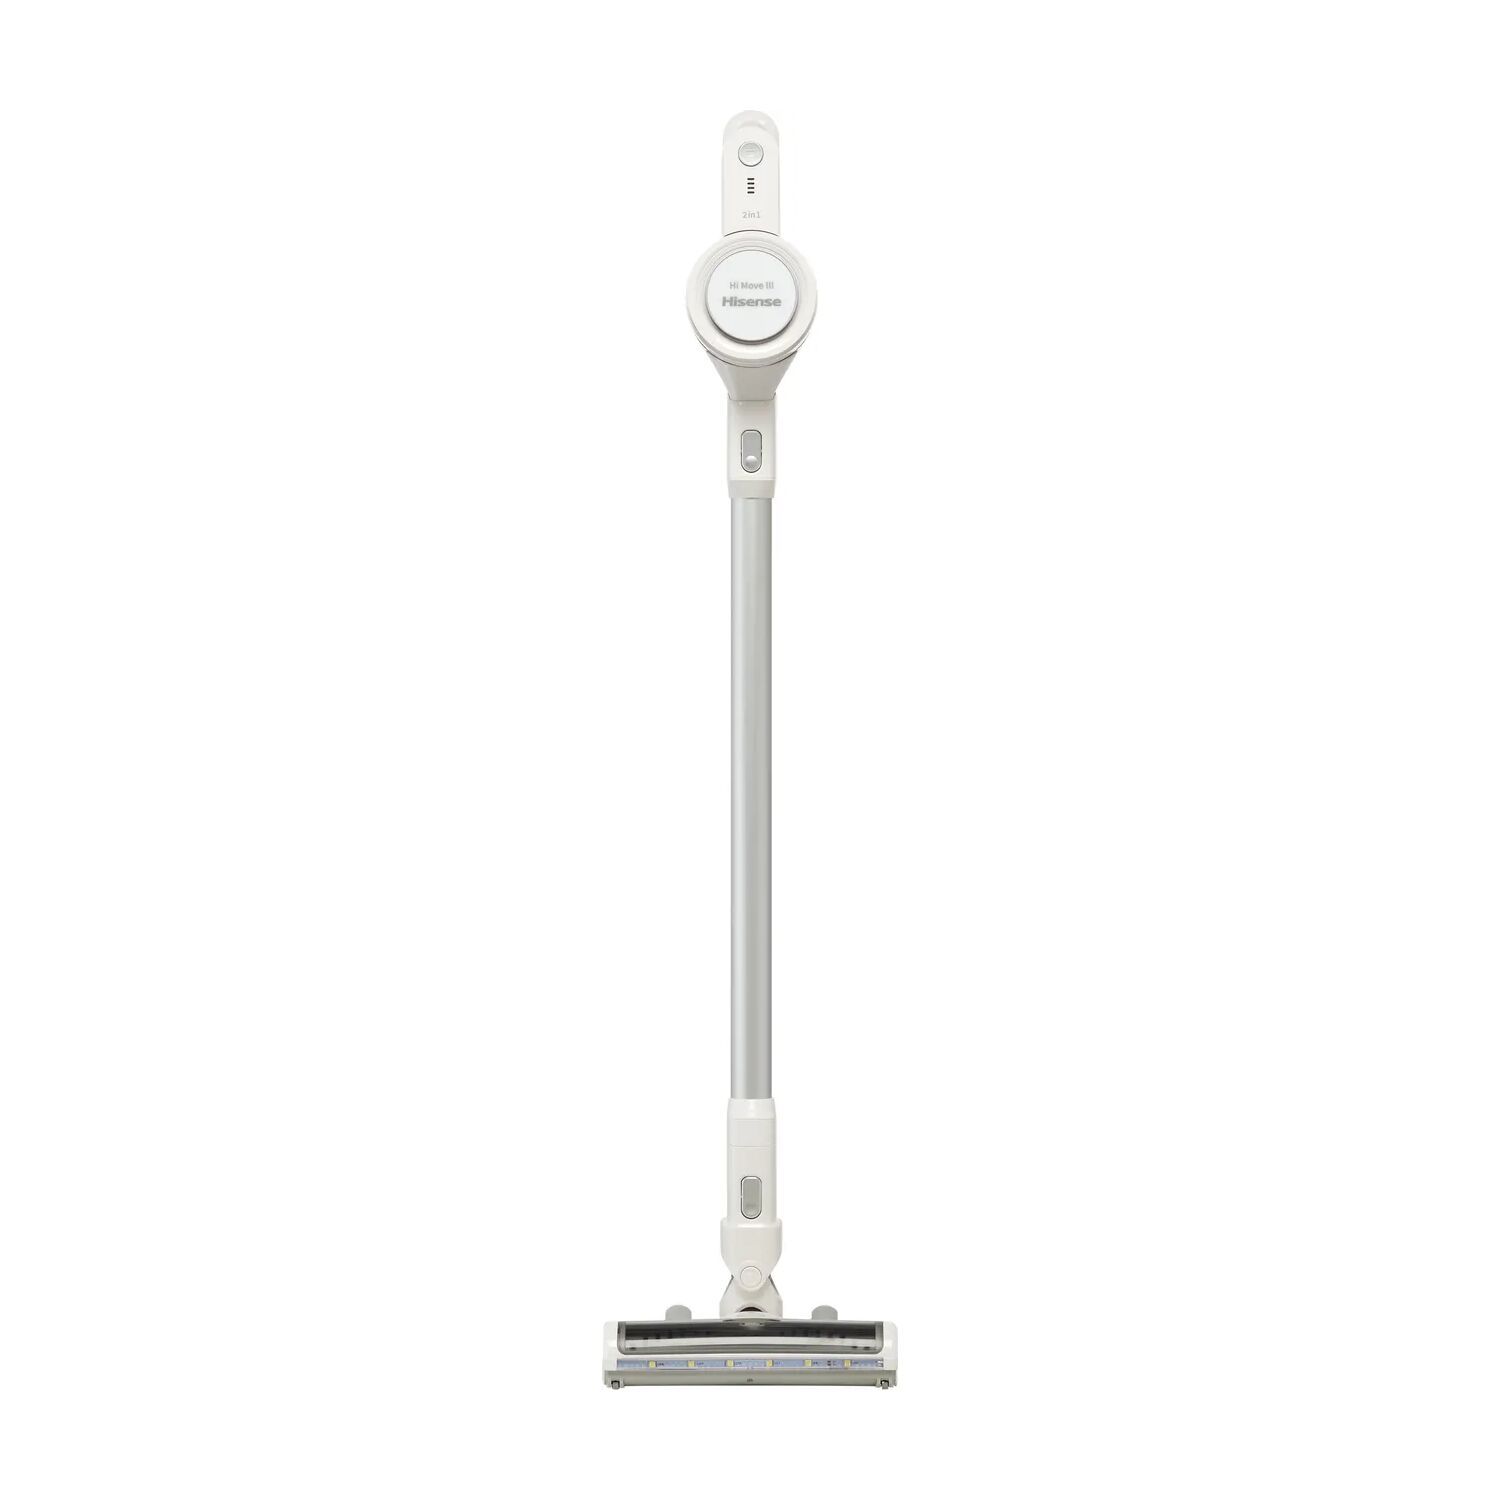 Hisense Cordless Vacuum Cleaner With Illuminated Brushbar & Up To 45 Mins Run Time - White